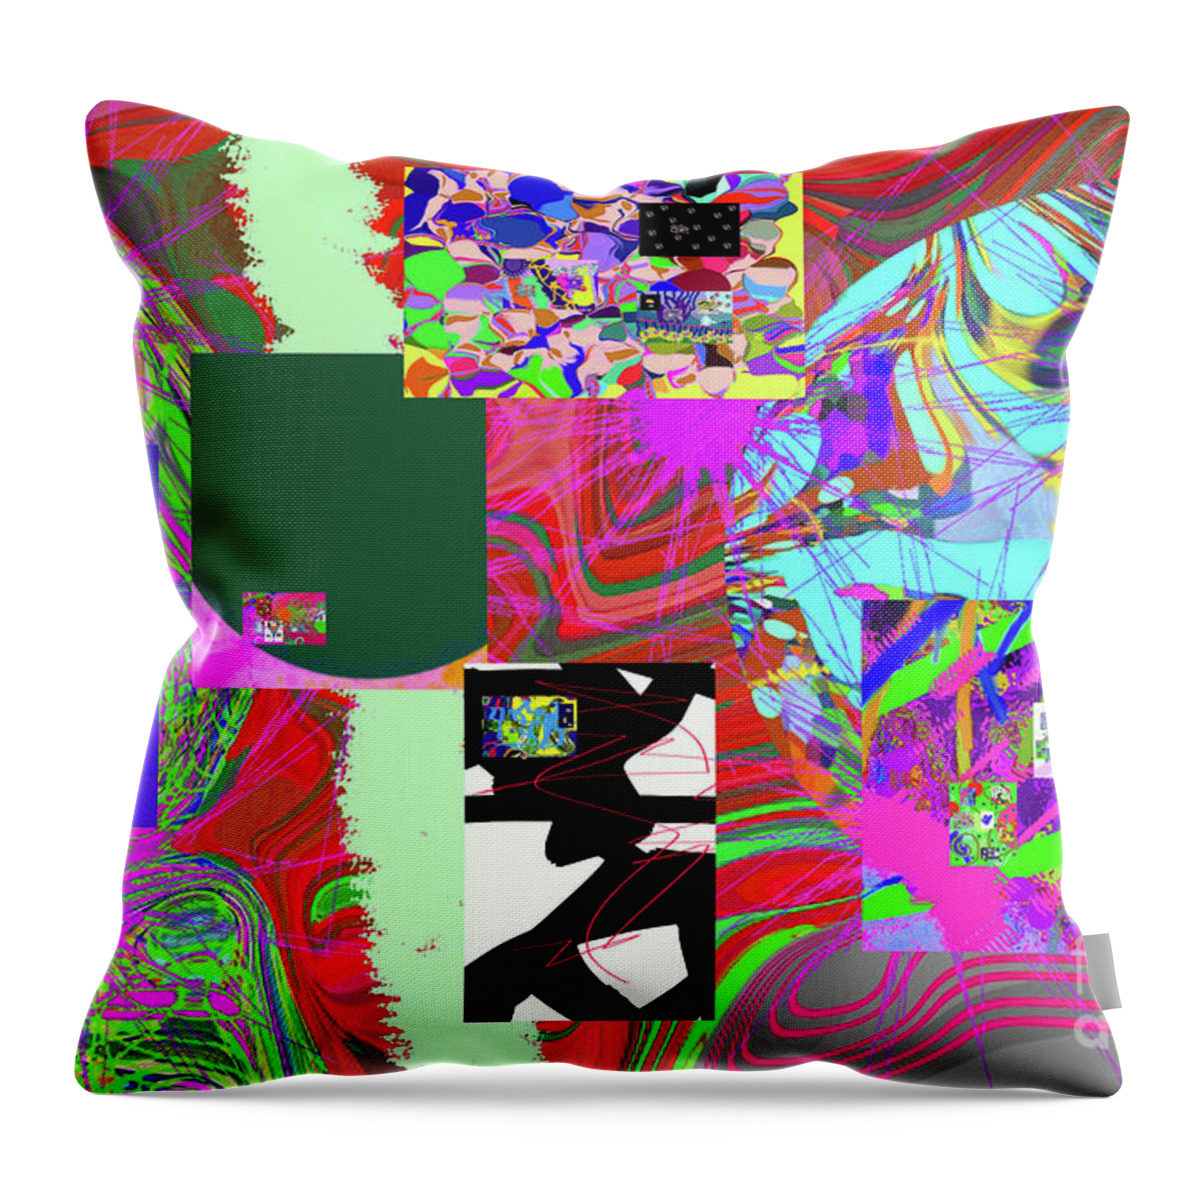 Walter Paul Bebirian Throw Pillow featuring the digital art 10-20-2015babcdefghijklmnopqrtuvwxyza by Walter Paul Bebirian